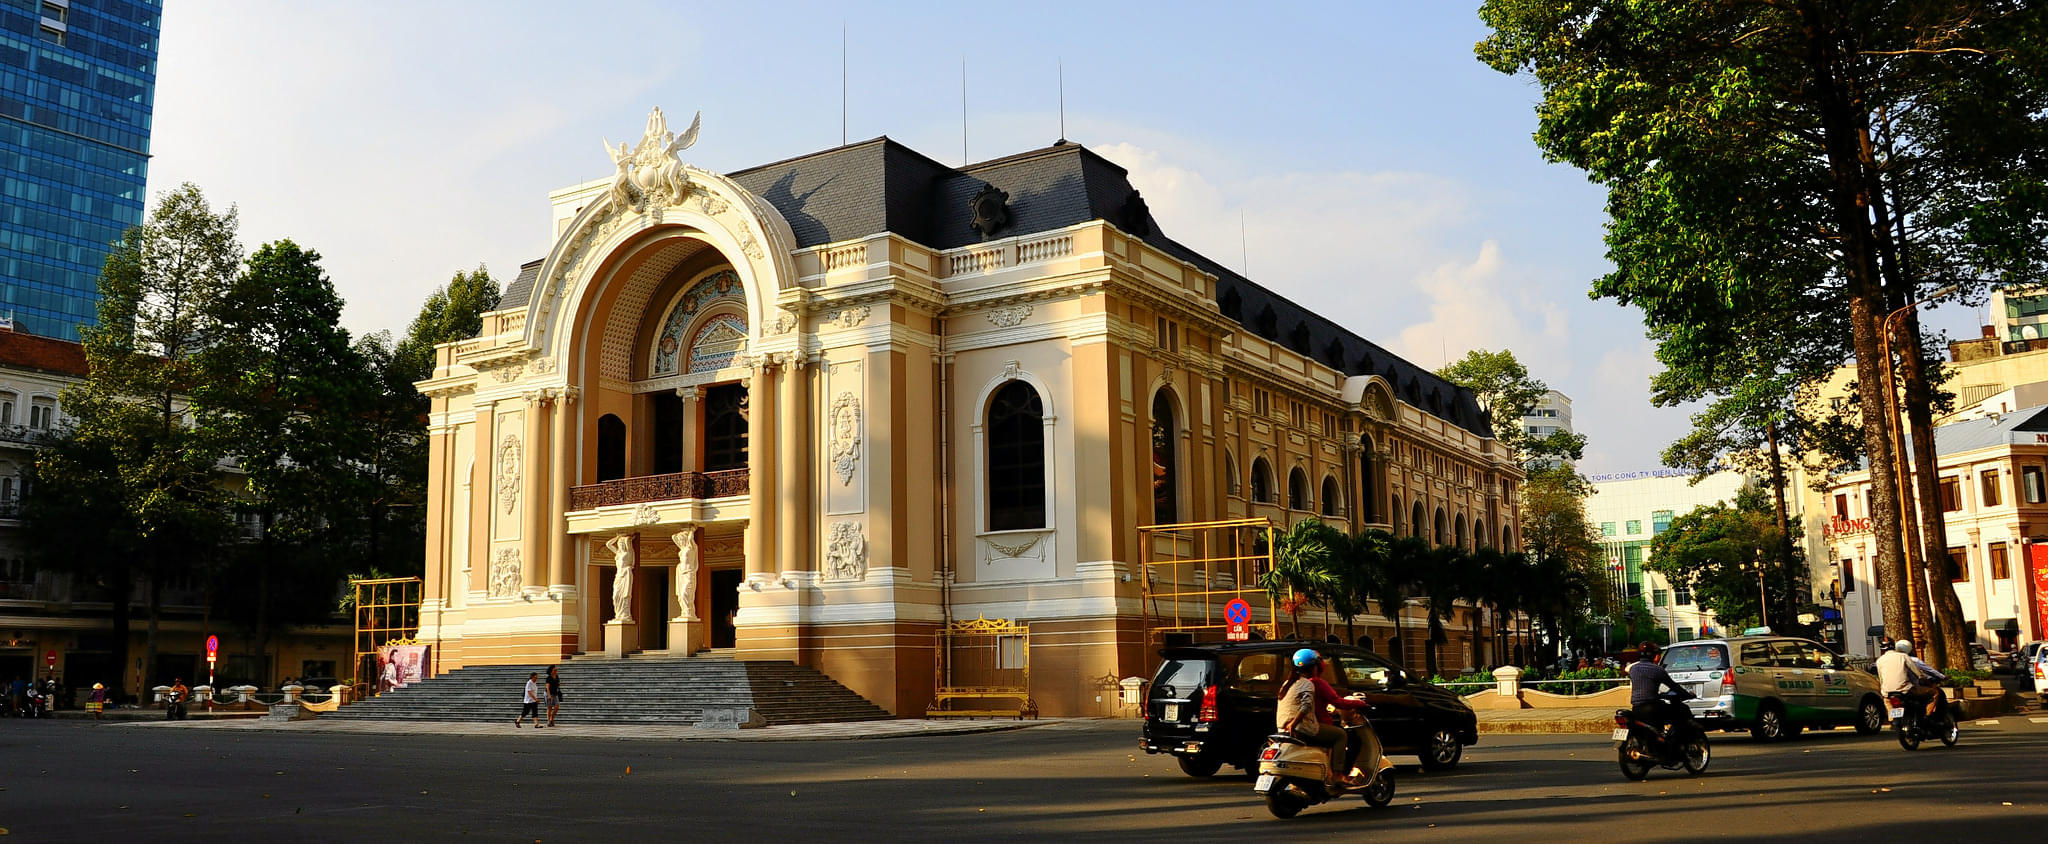 Saigon Opera House Overview